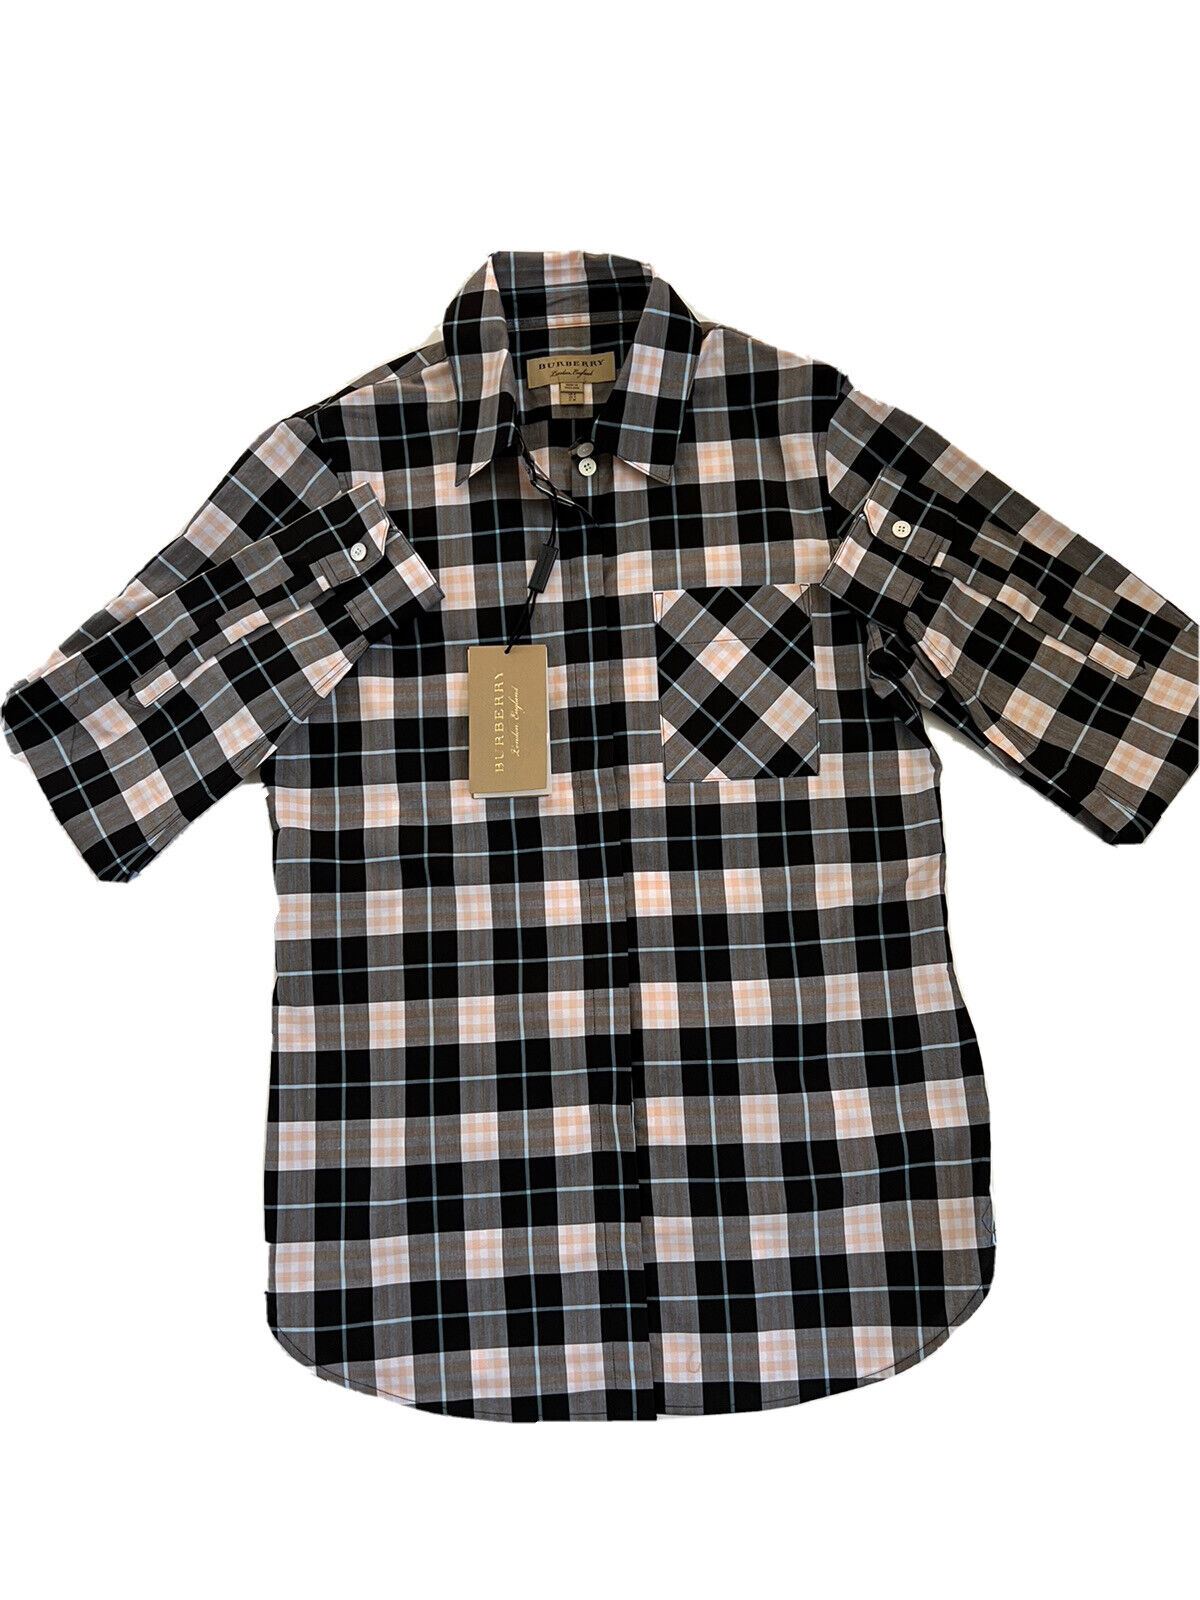 NWT $250 Burberry Men's Black Cotton Button-Up Shirt Medium 4015368